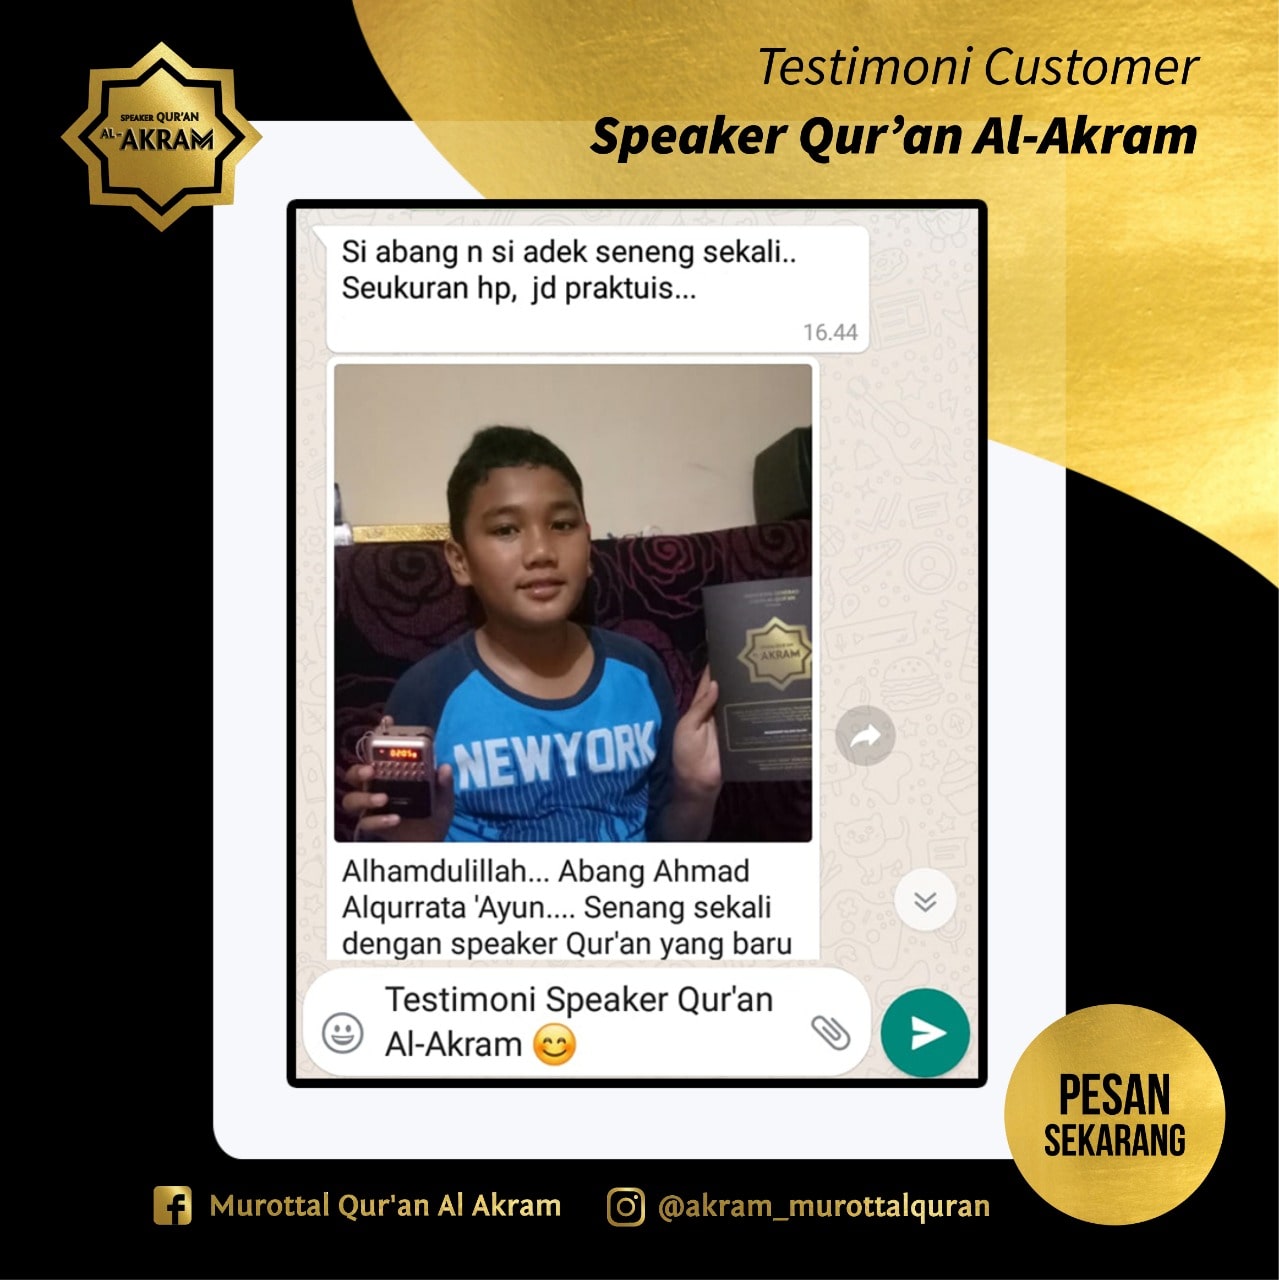 speaker-quran-alakram-testi1.